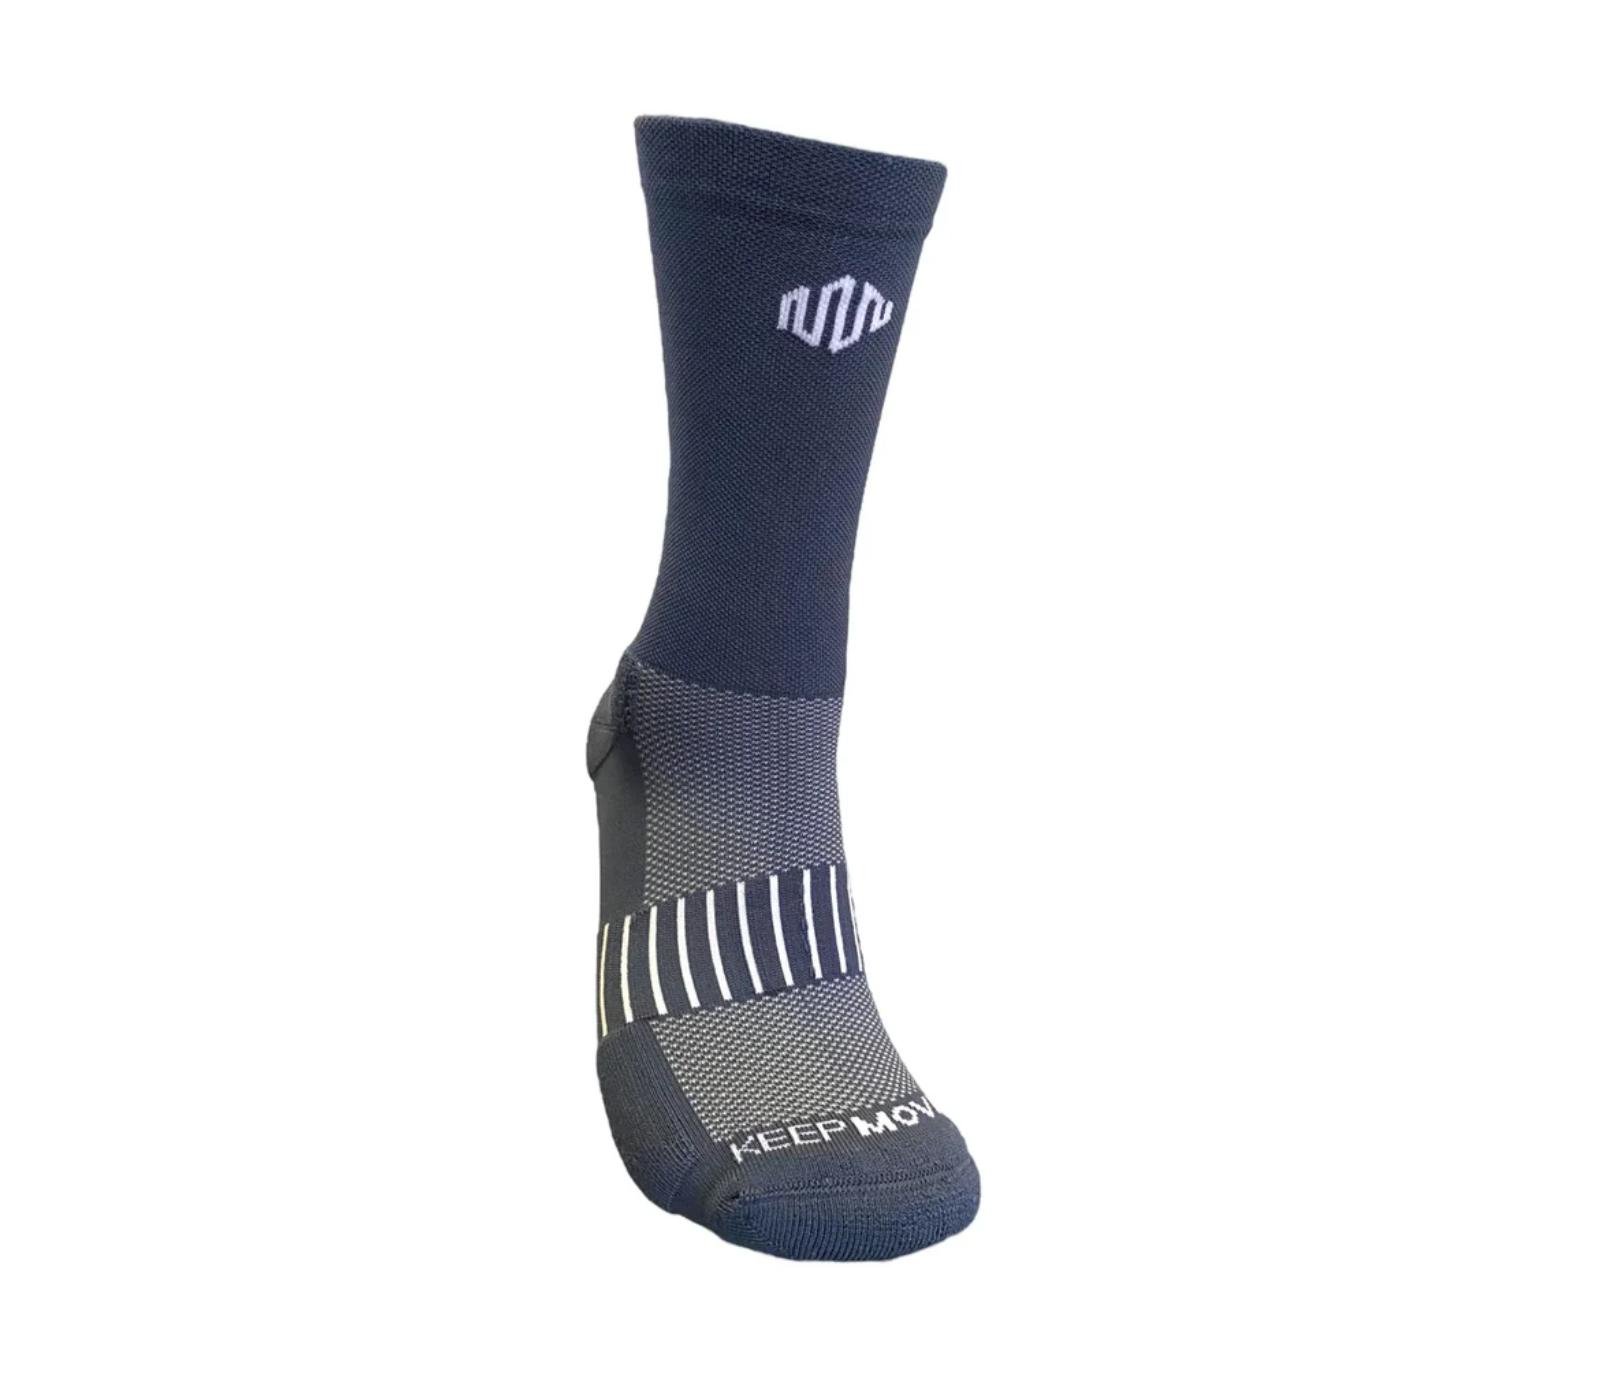 Keep Moving Ultra Grey Men's Socks 